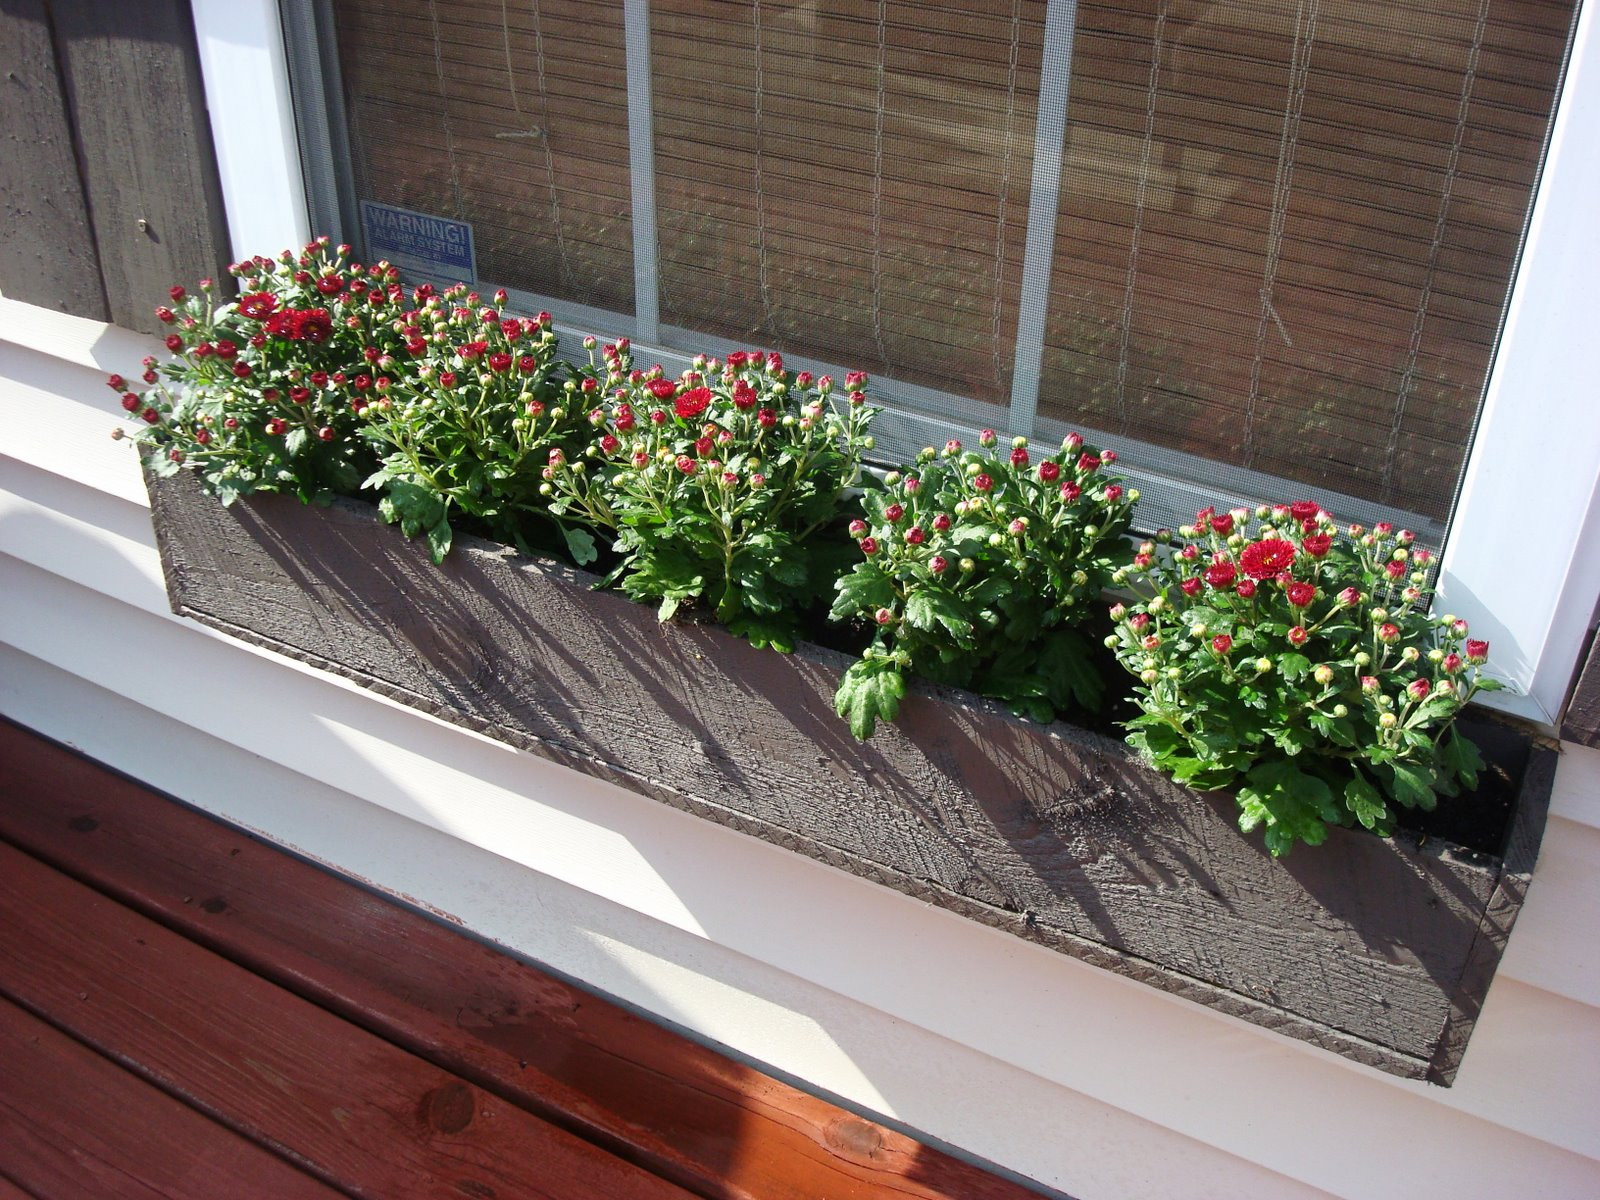 Best ideas about DIY Window Box Planters
. Save or Pin 12 Gorgeous DIY Window Box Planters Now.